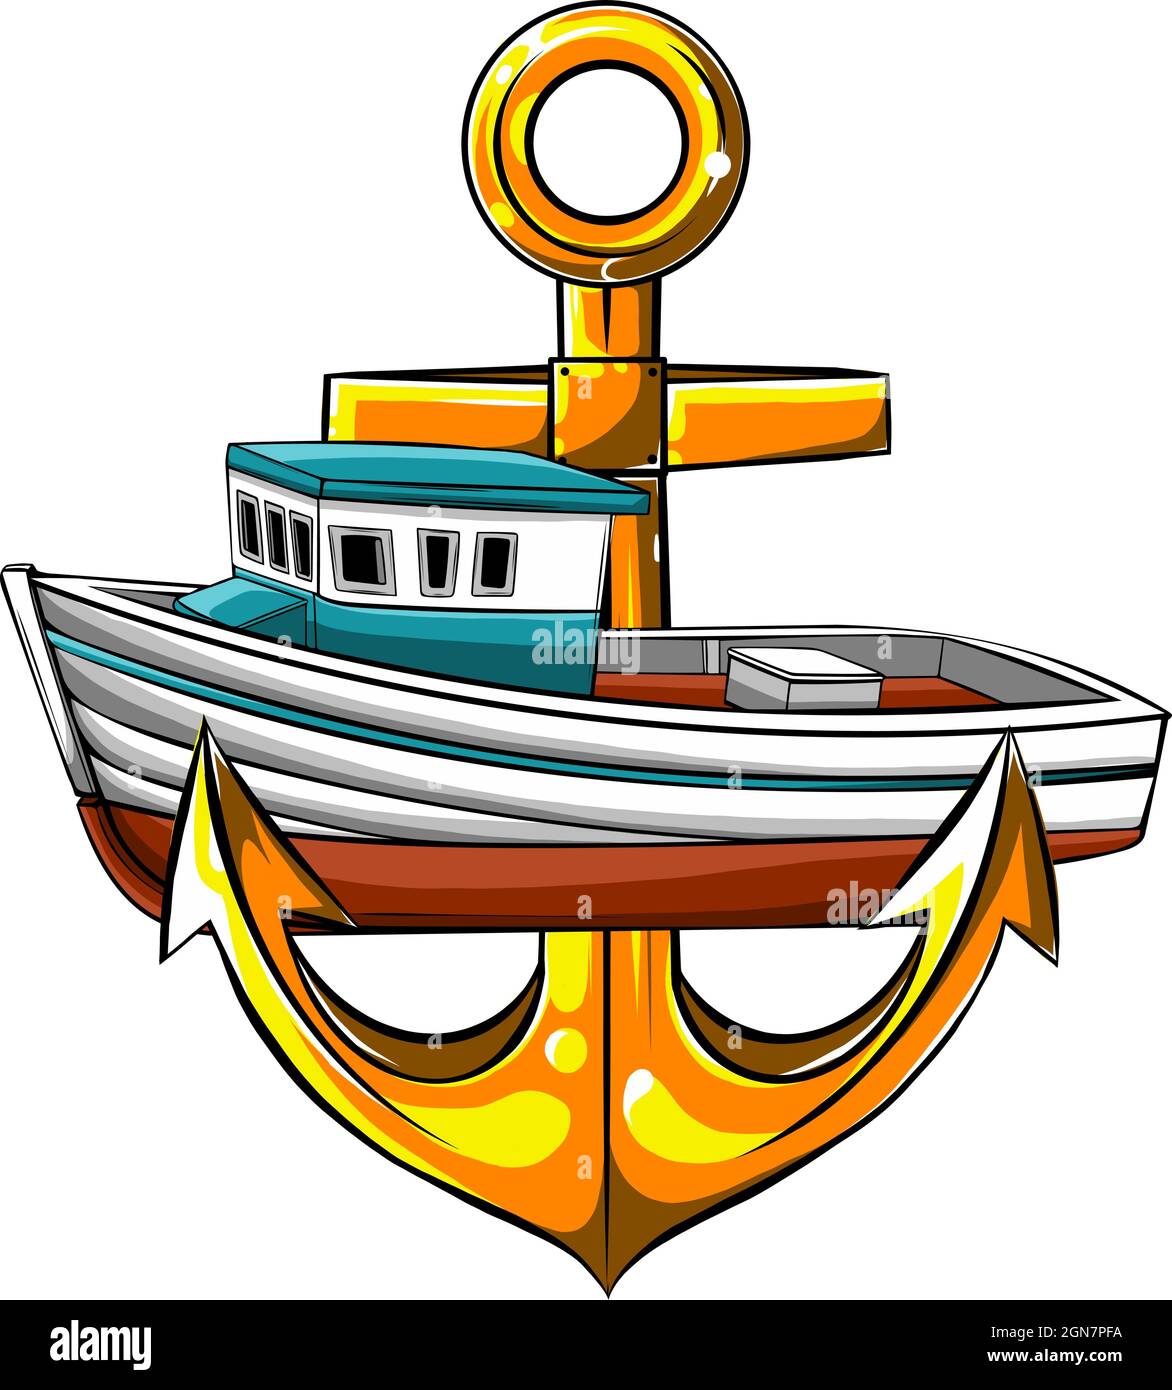 https://c8.alamy.com/comp/2GN7PFA/vector-illustration-of-fish-boat-with-anchor-cartoon-caricature-2GN7PFA.jpg